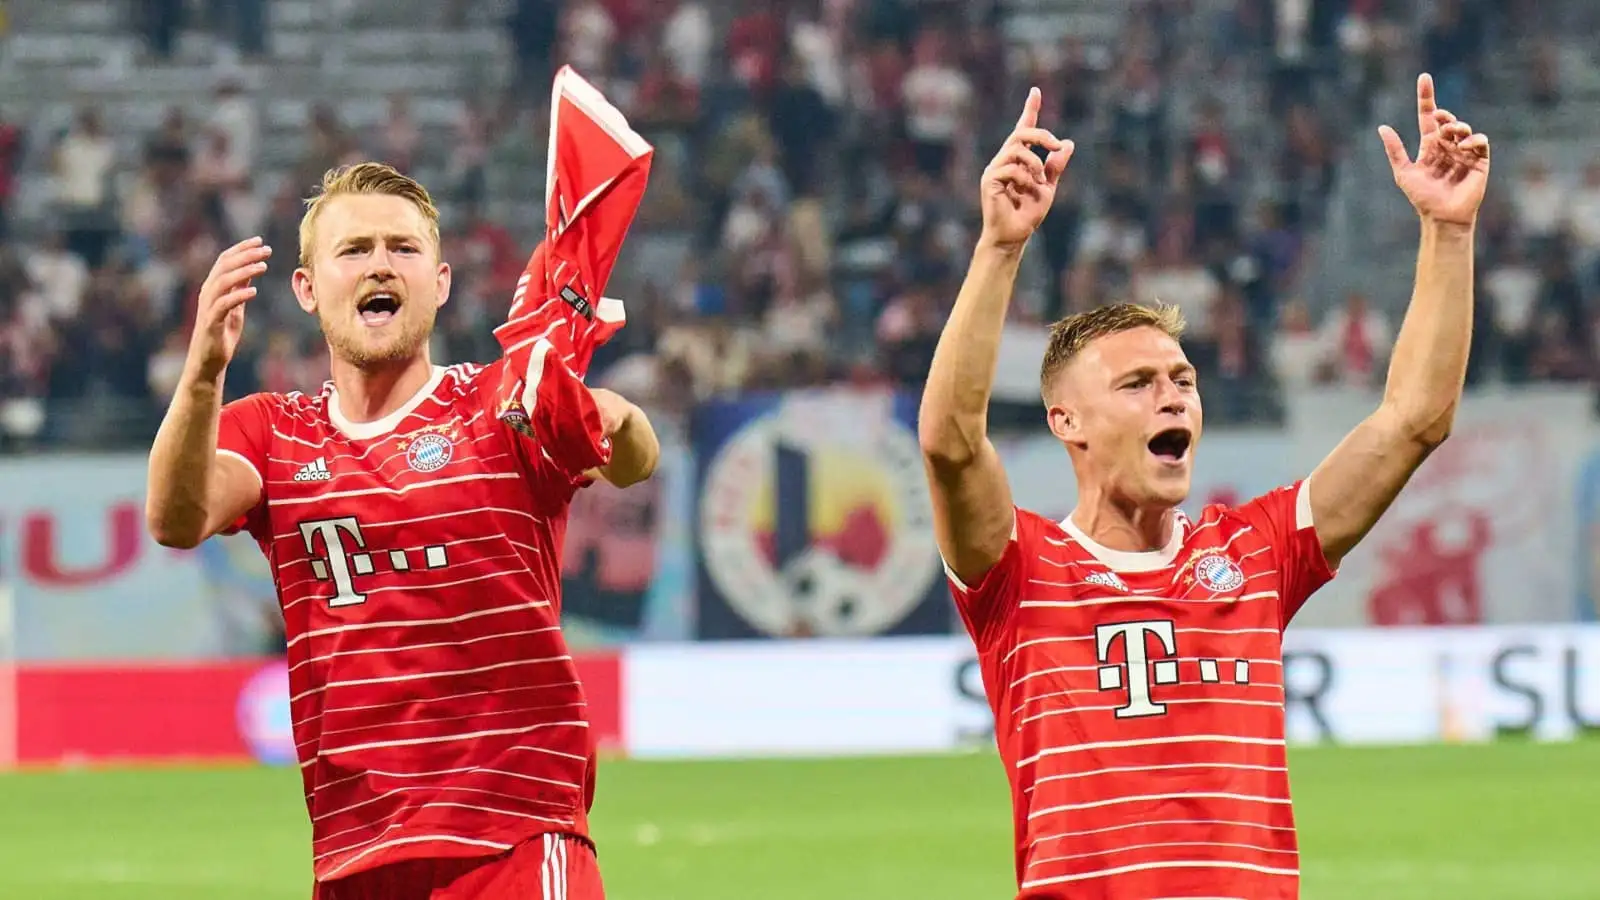 Bayern Munich duo Matthijs de Ligt and Joshua Kimmich